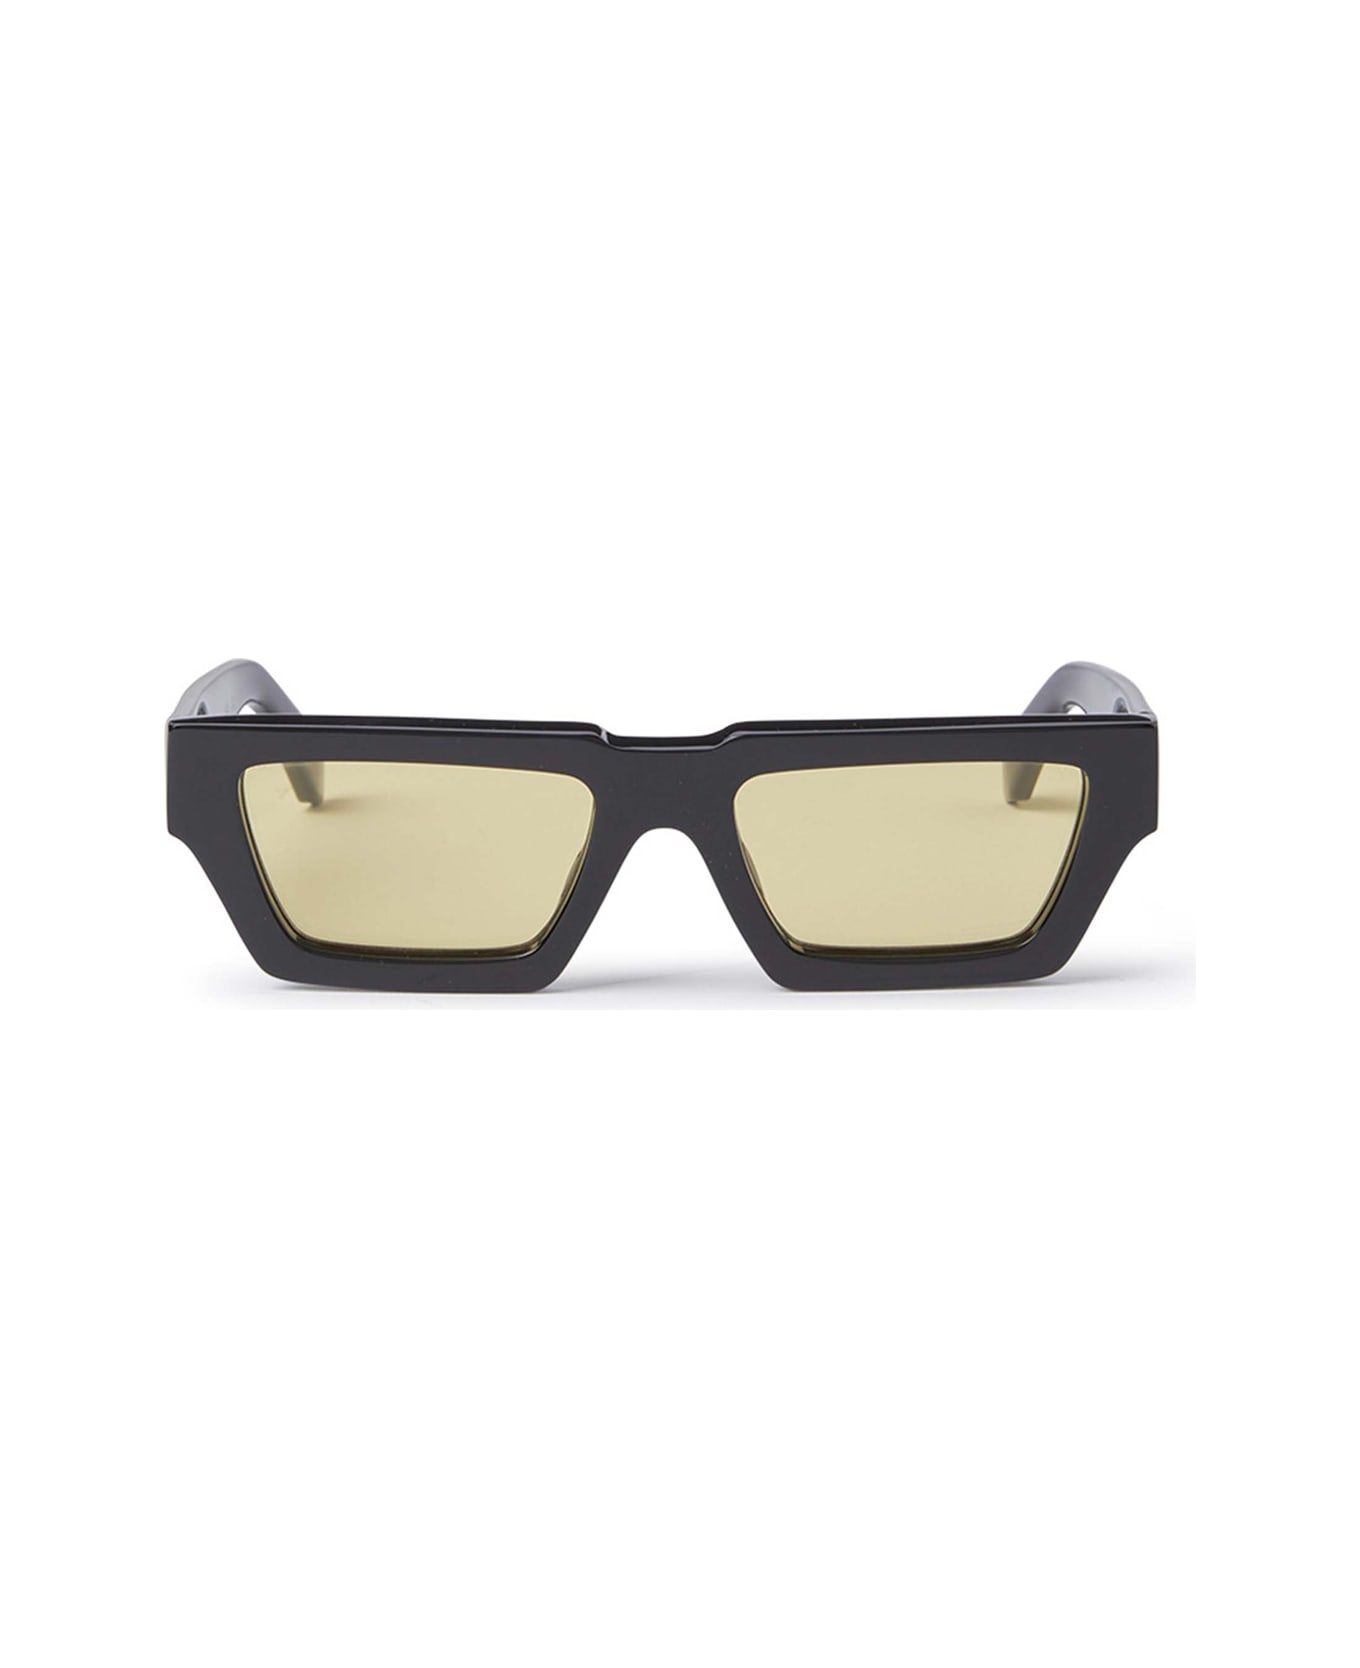 Off-White Oeri129 Manchester 1018 Black Sunglasses - Nero サングラス